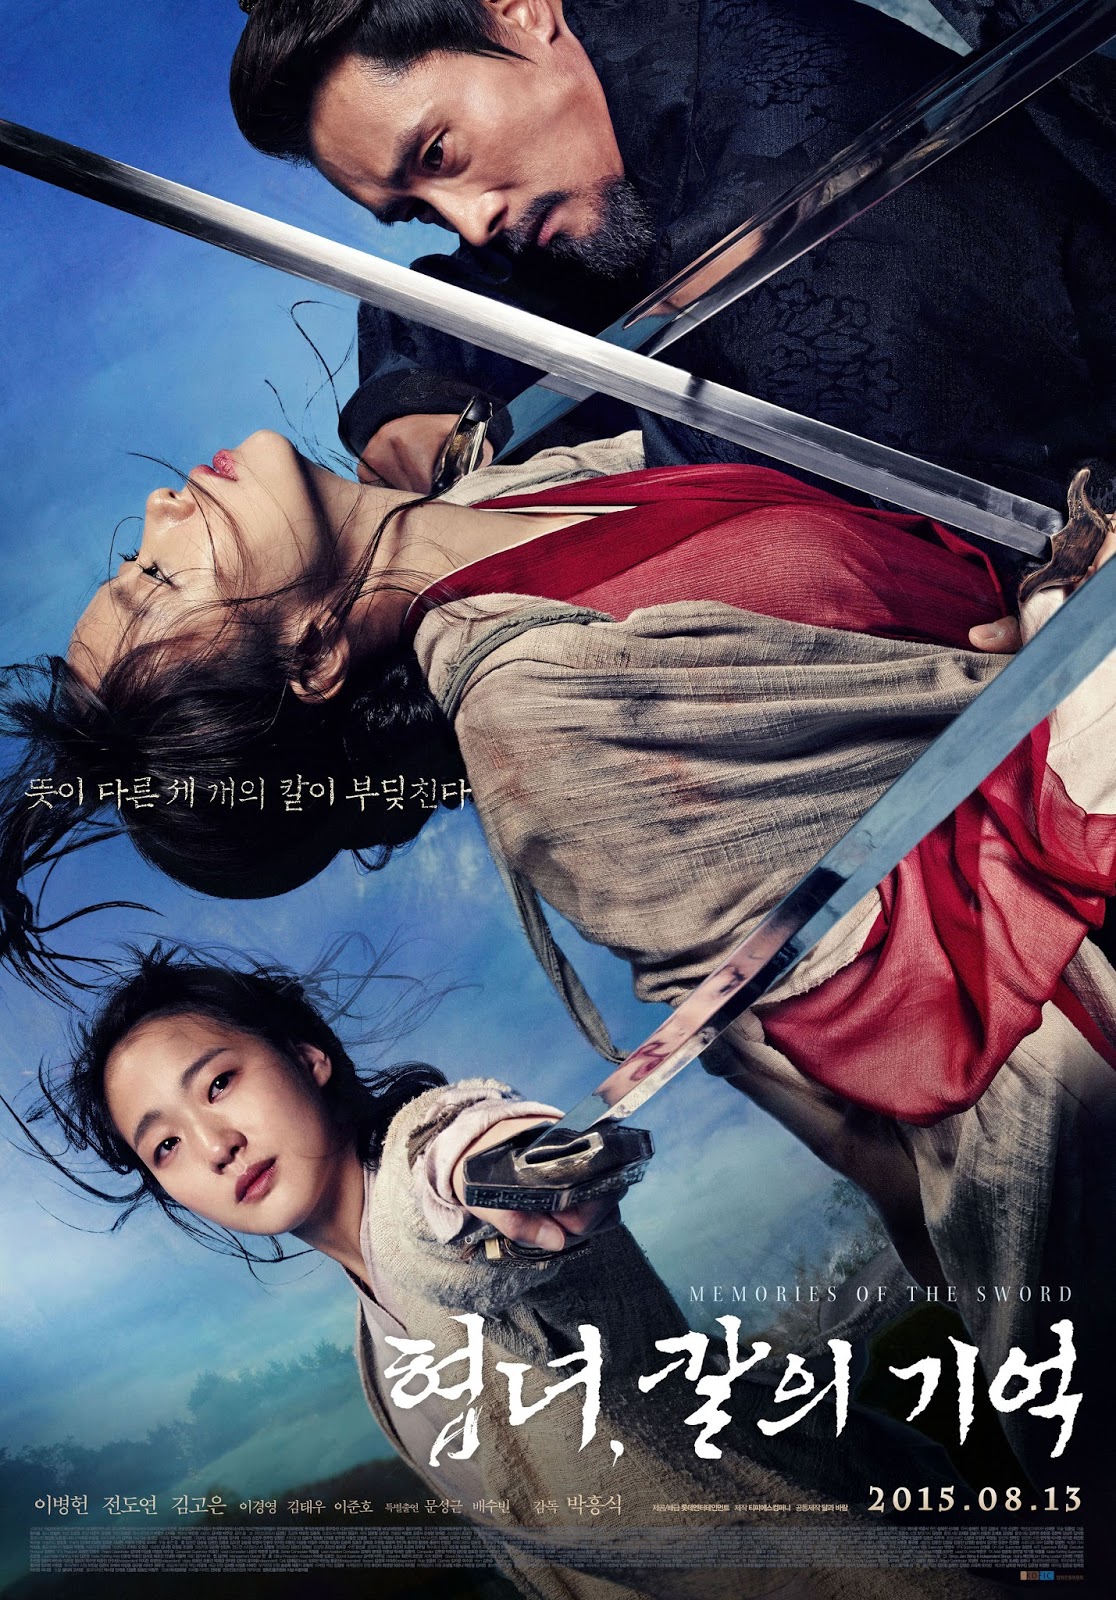 Memories of the Sword (Hyeomnyeo: Kar-ui gi-eok)-áá¡ á¡á£á áááá¡ á¨ááááá